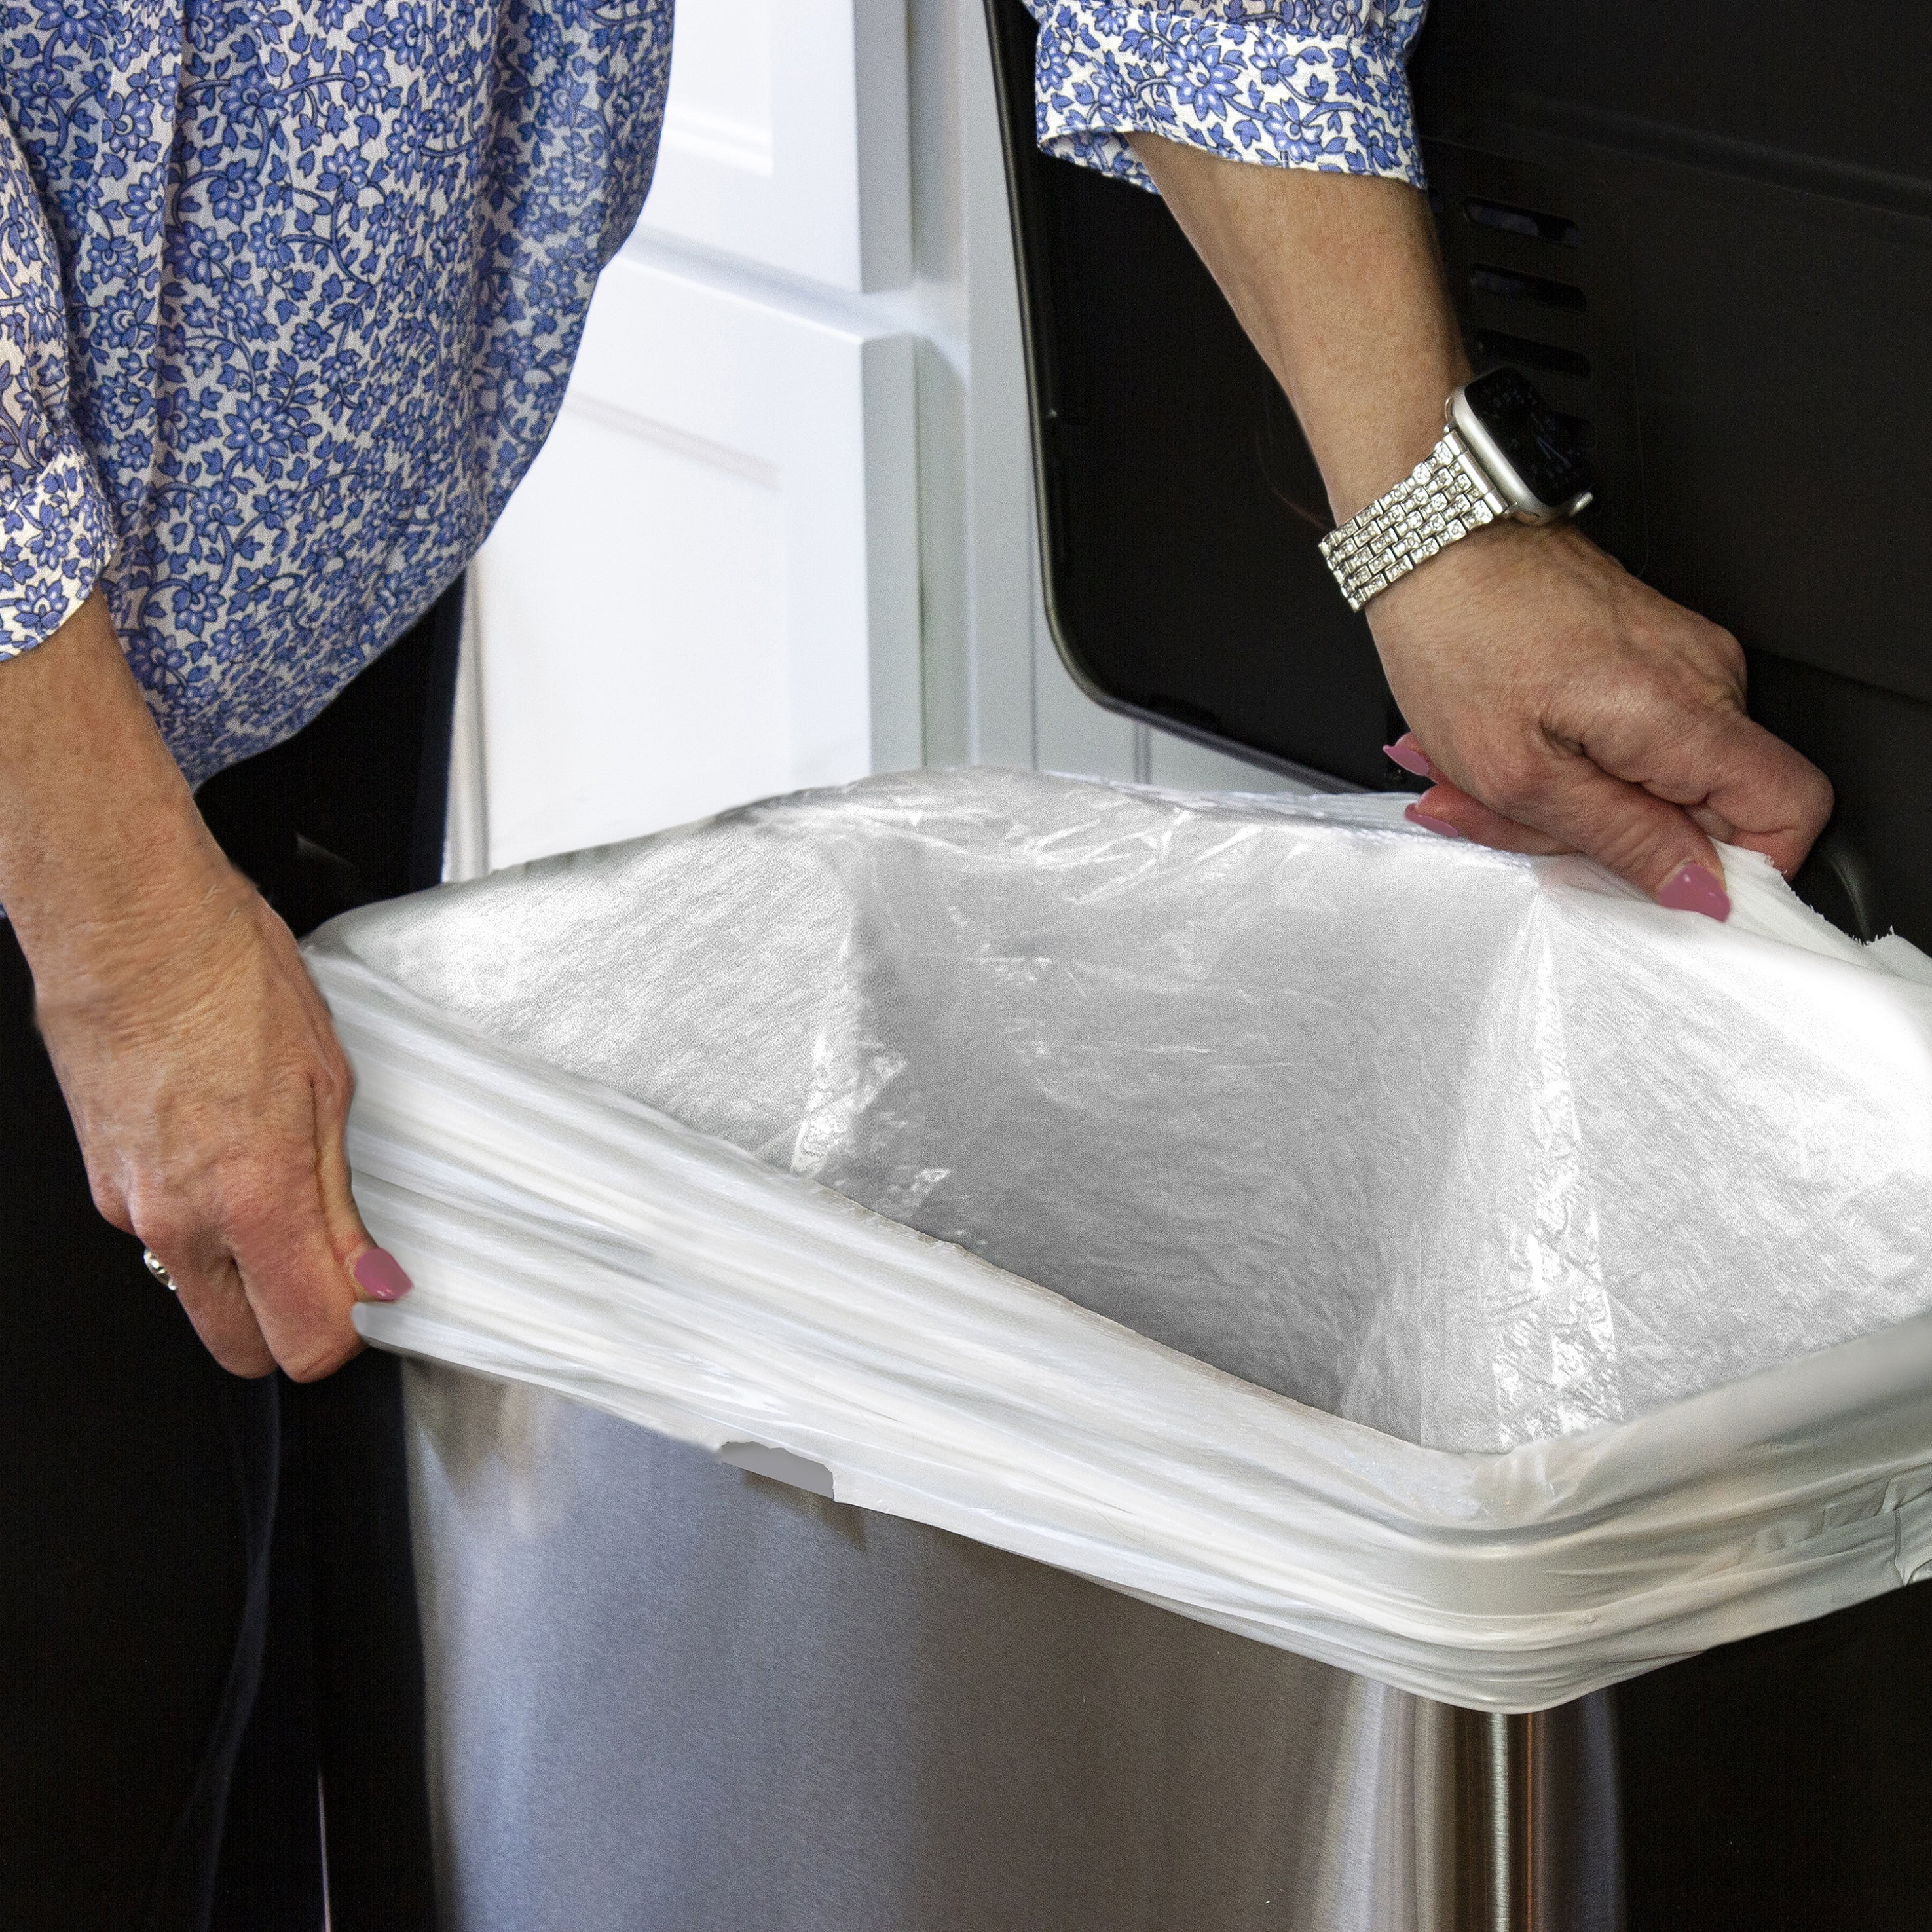 2-Pack) 13 Gallon Tall Kitchen Drawstring Trash Bags , 40 Count – Sawaa's